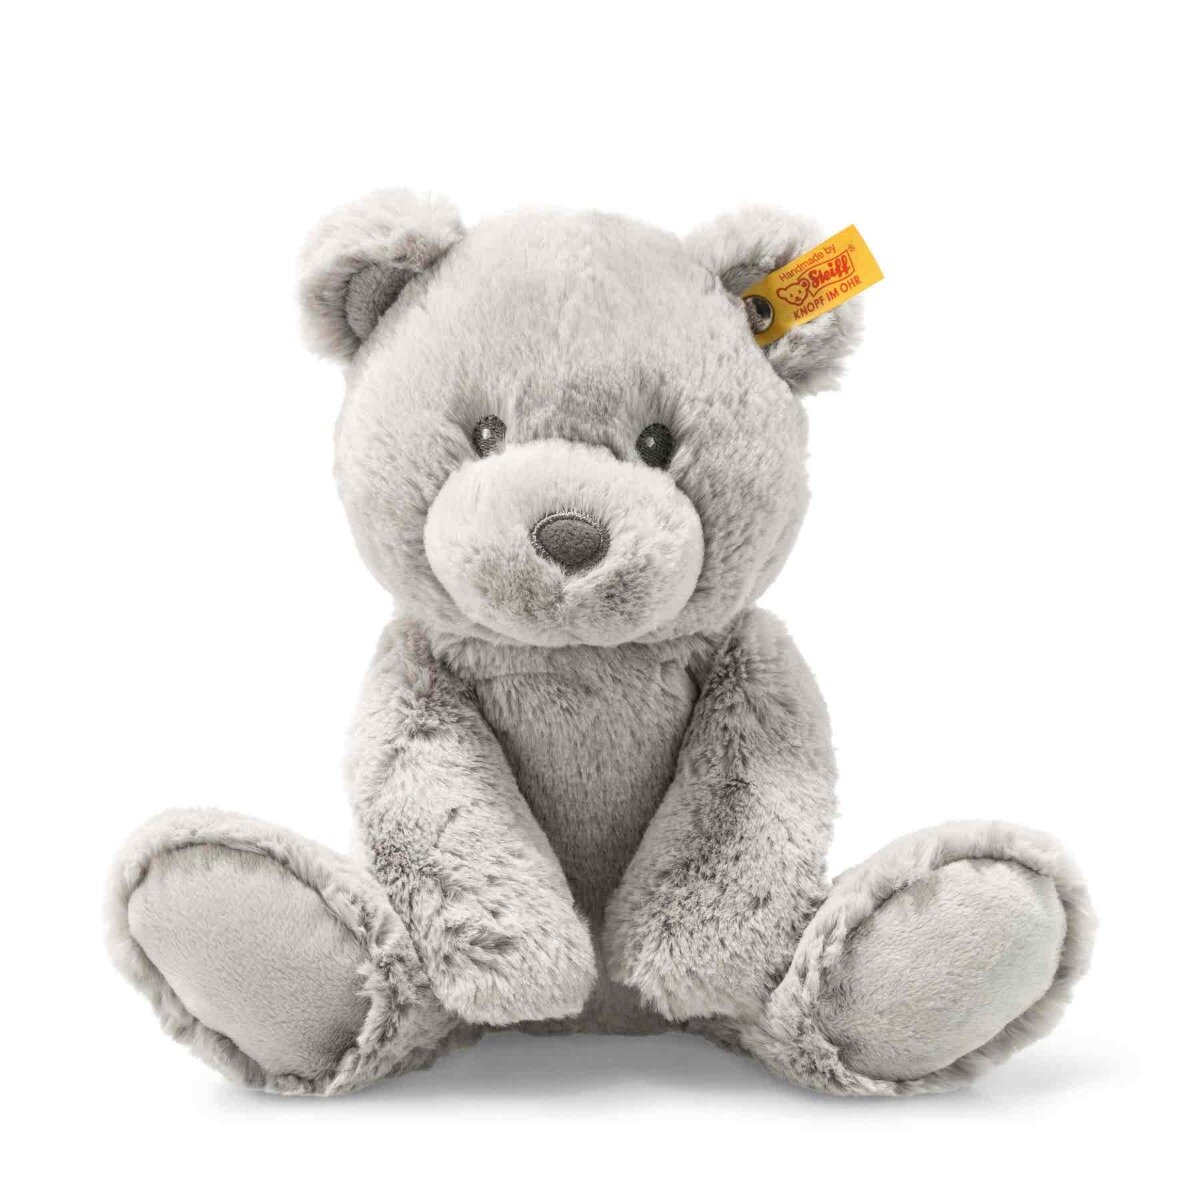 Мягкая игрушка Steiff Soft Cuddly Friends Bearzy (Штайф мягкие приятные друзья Бэрзи 28 см серый)